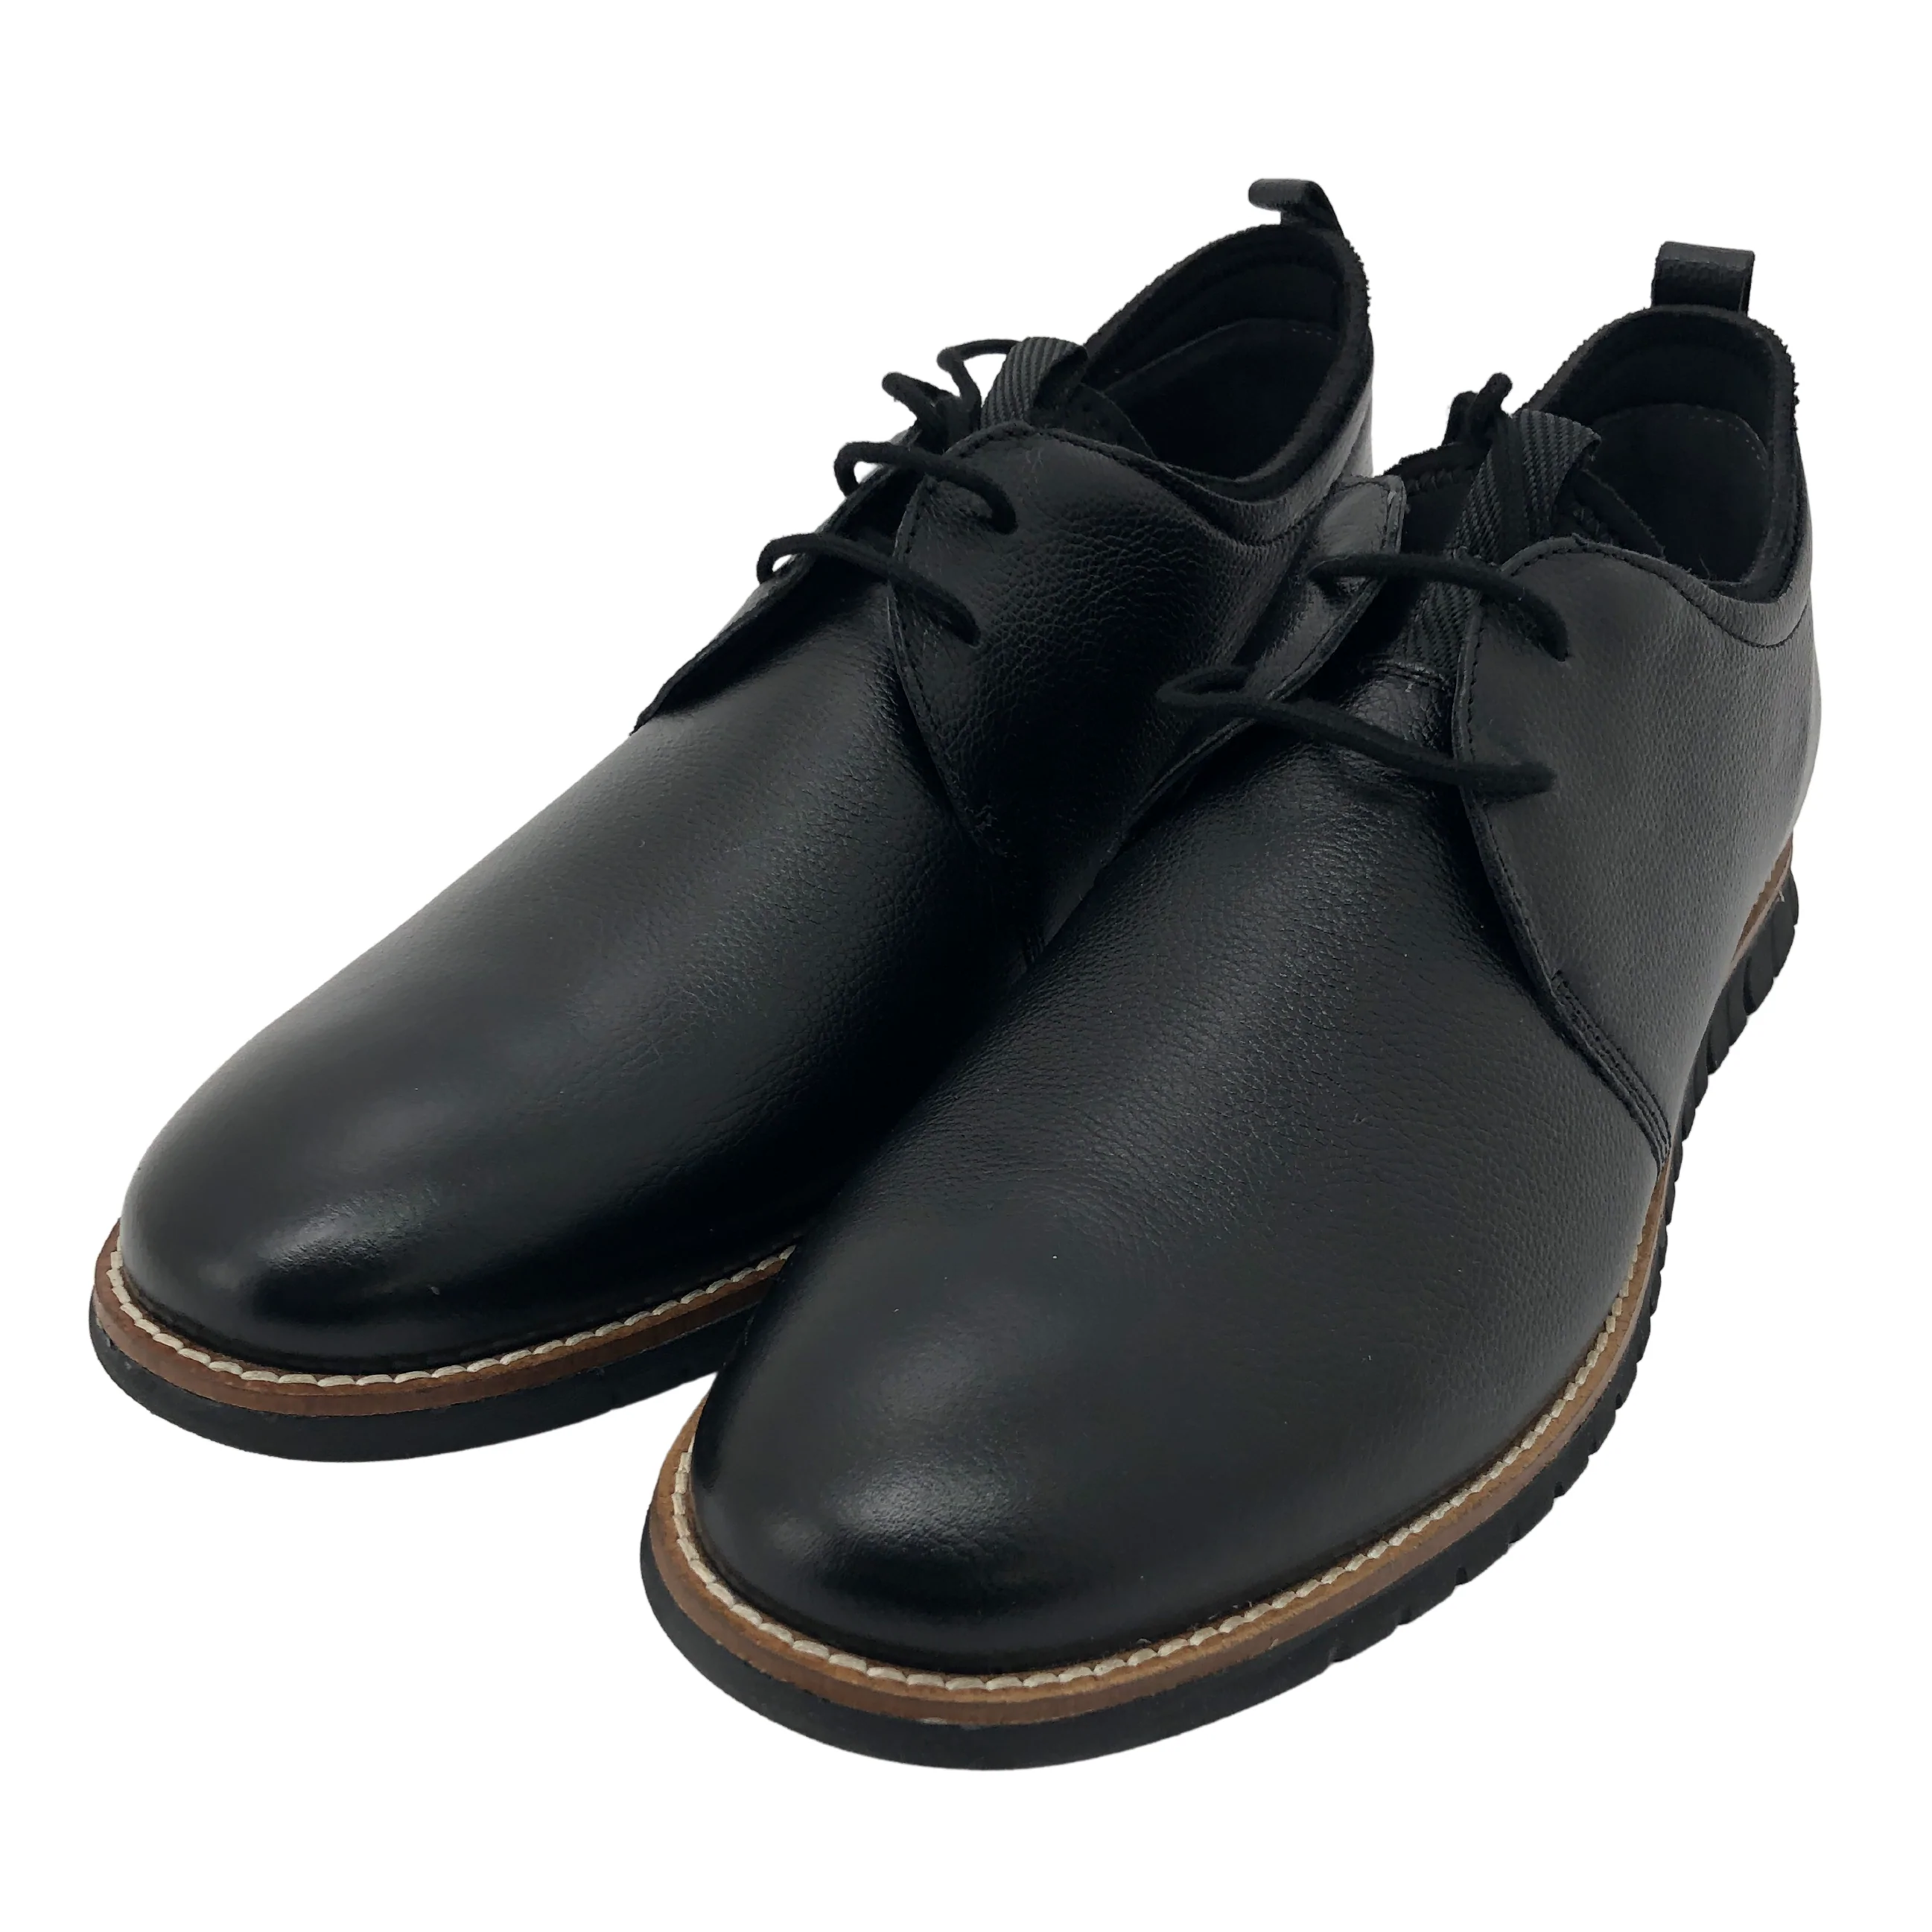 Hush Puppies Men's Dress Shoe / Oxford Style / Black / Various Sizes